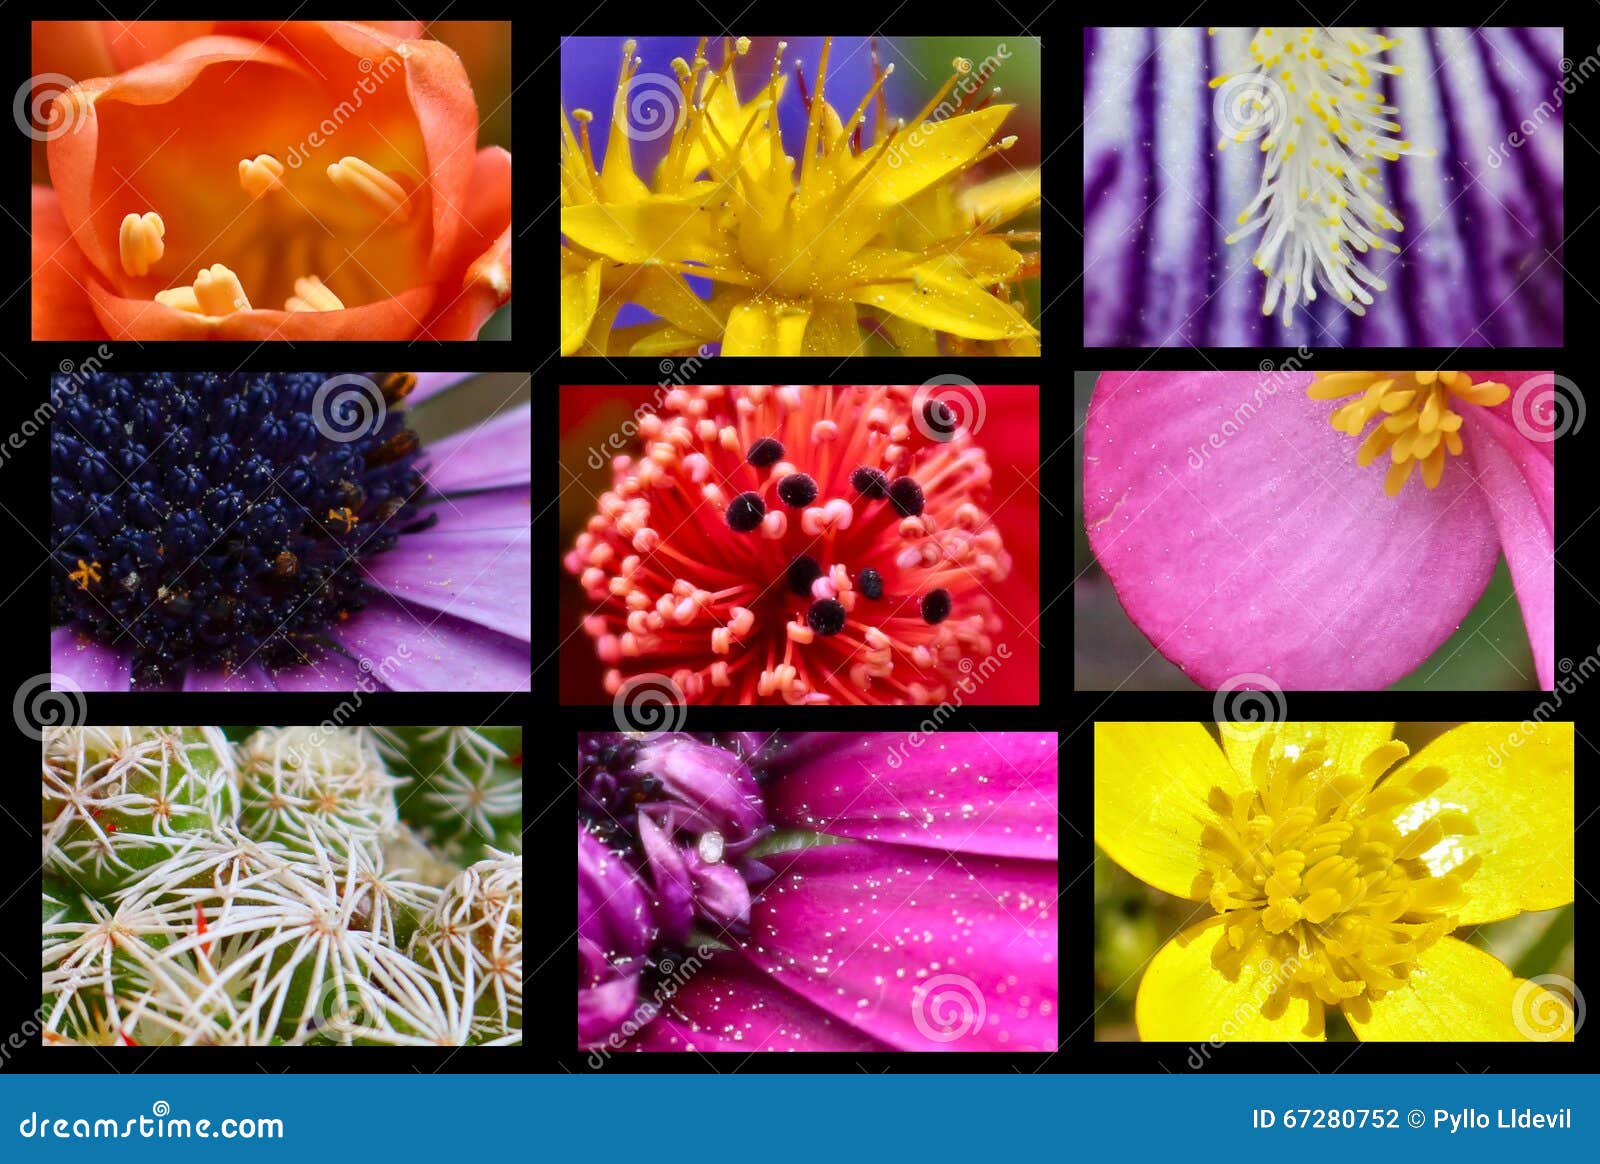 flower composition